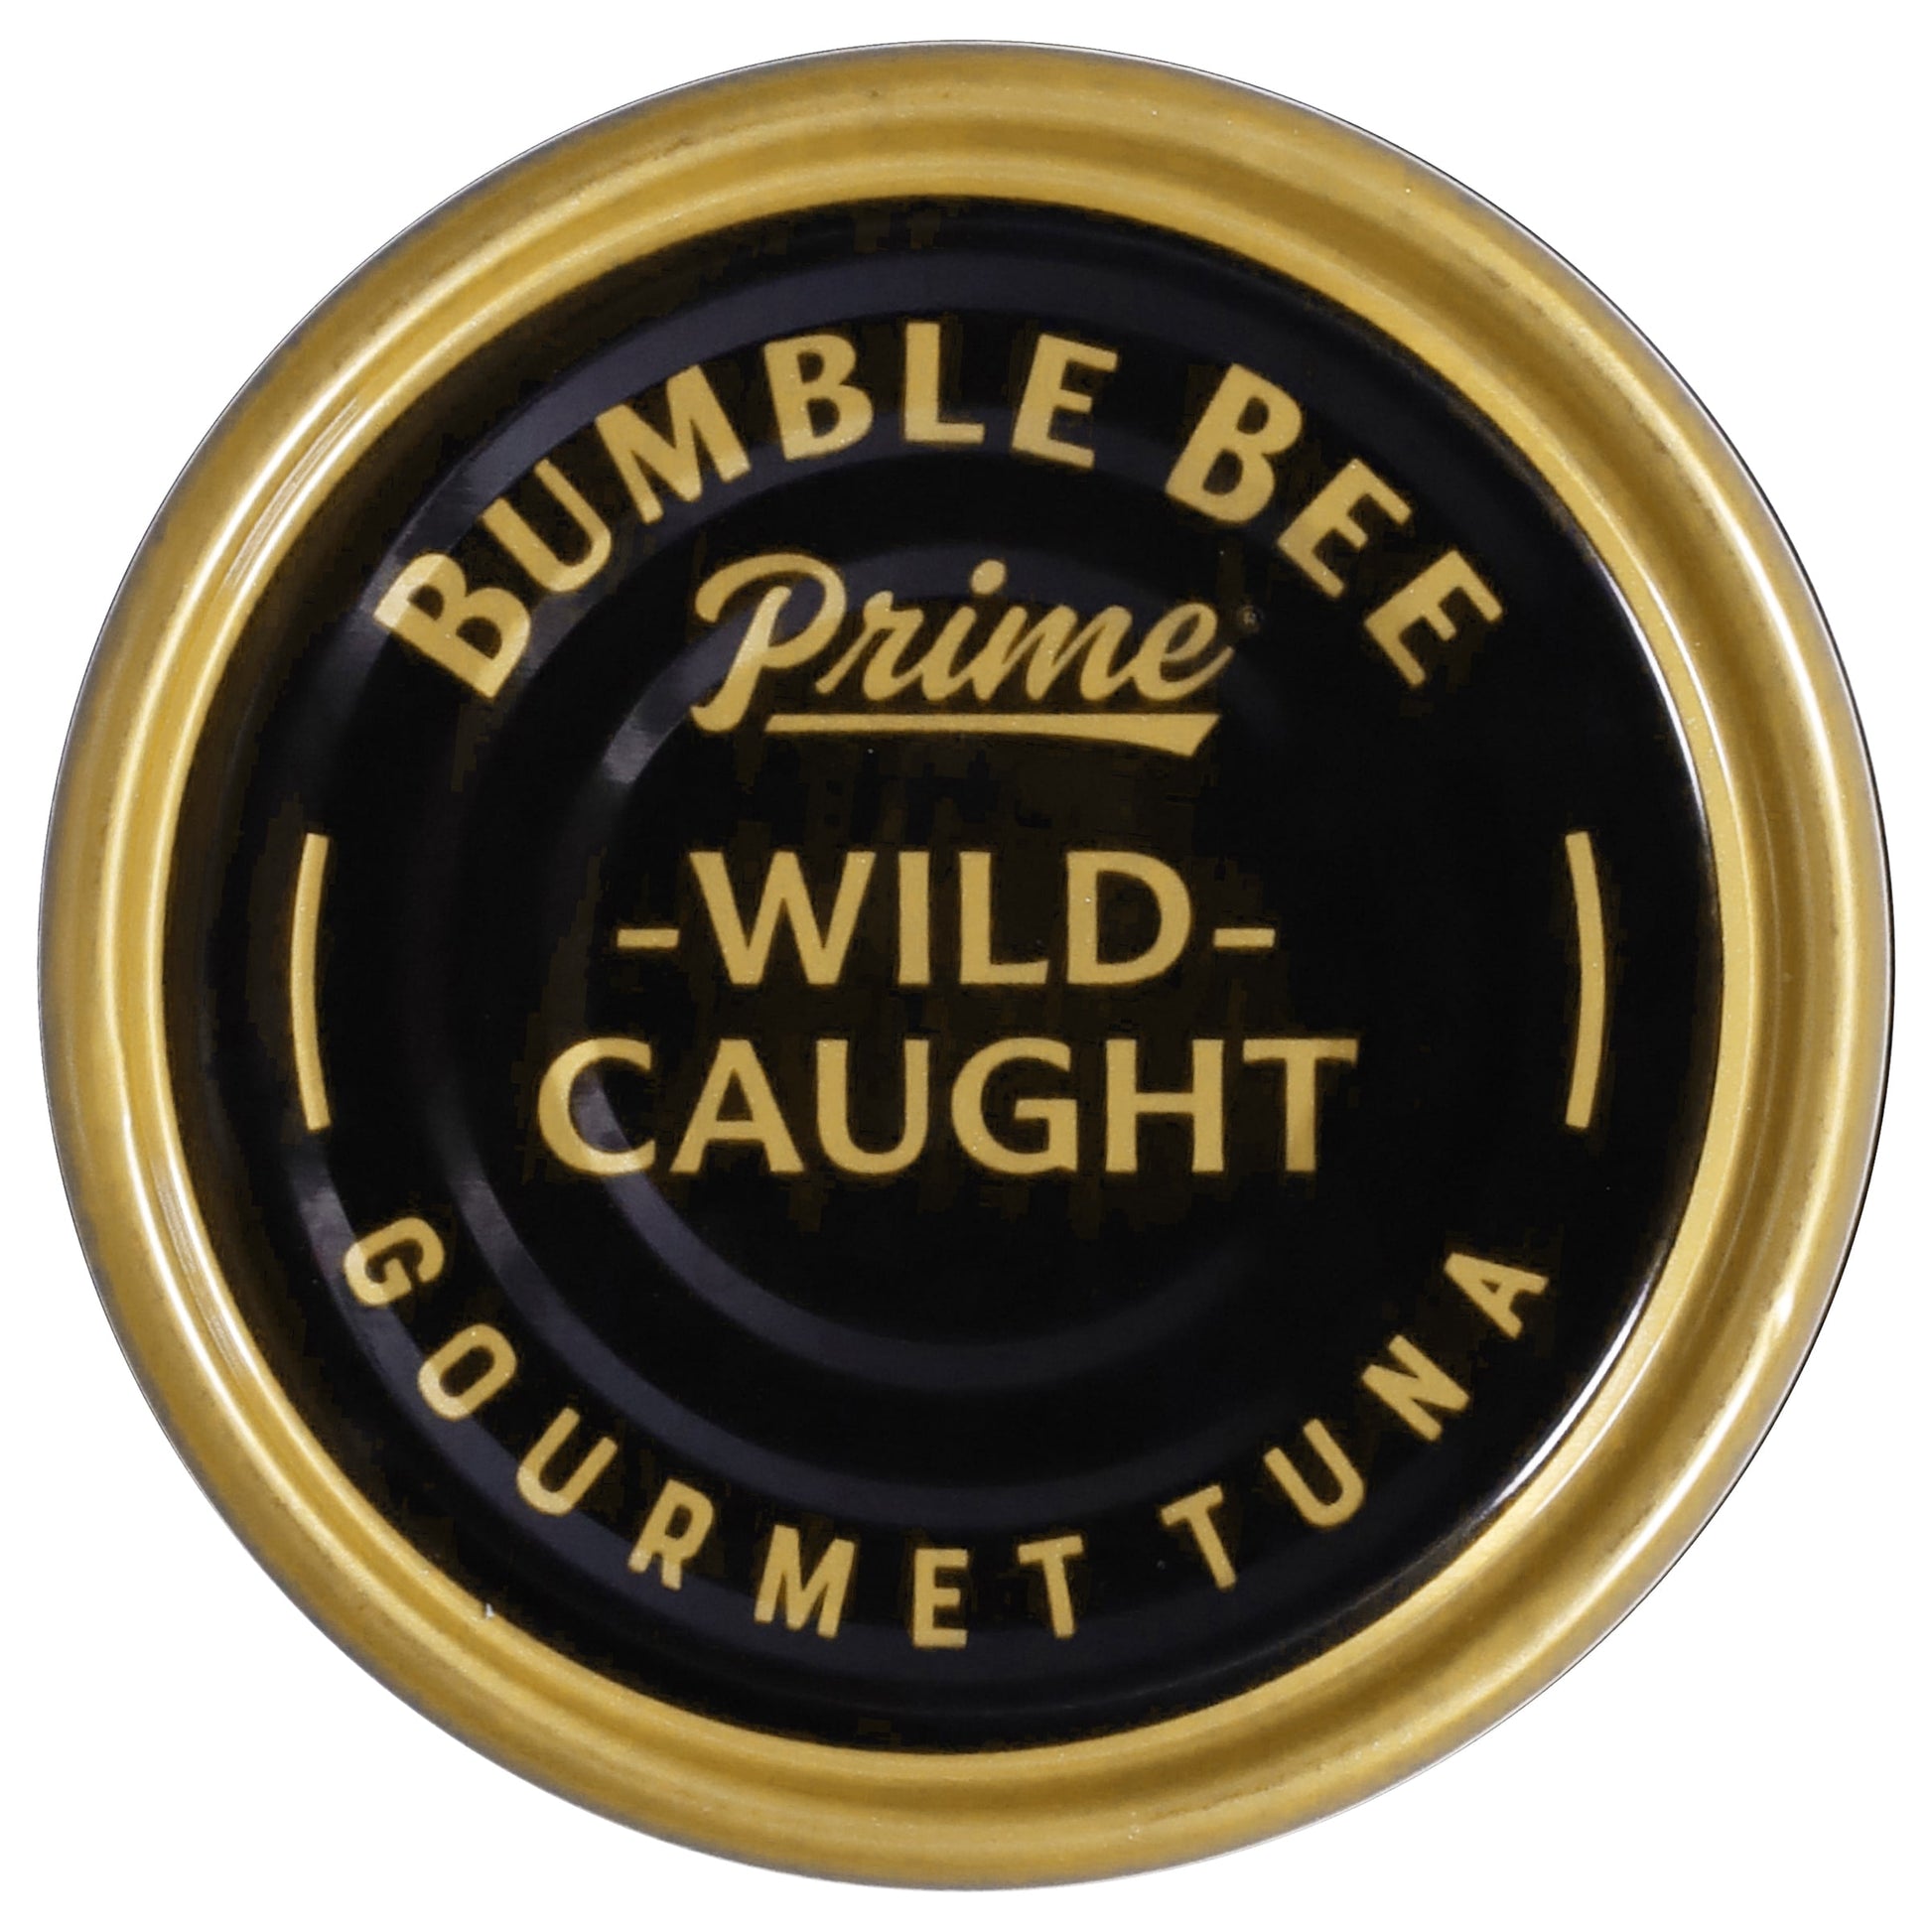 Prime Solid White Albacore Tuna Low Sodium in Water, 5 Oz Can